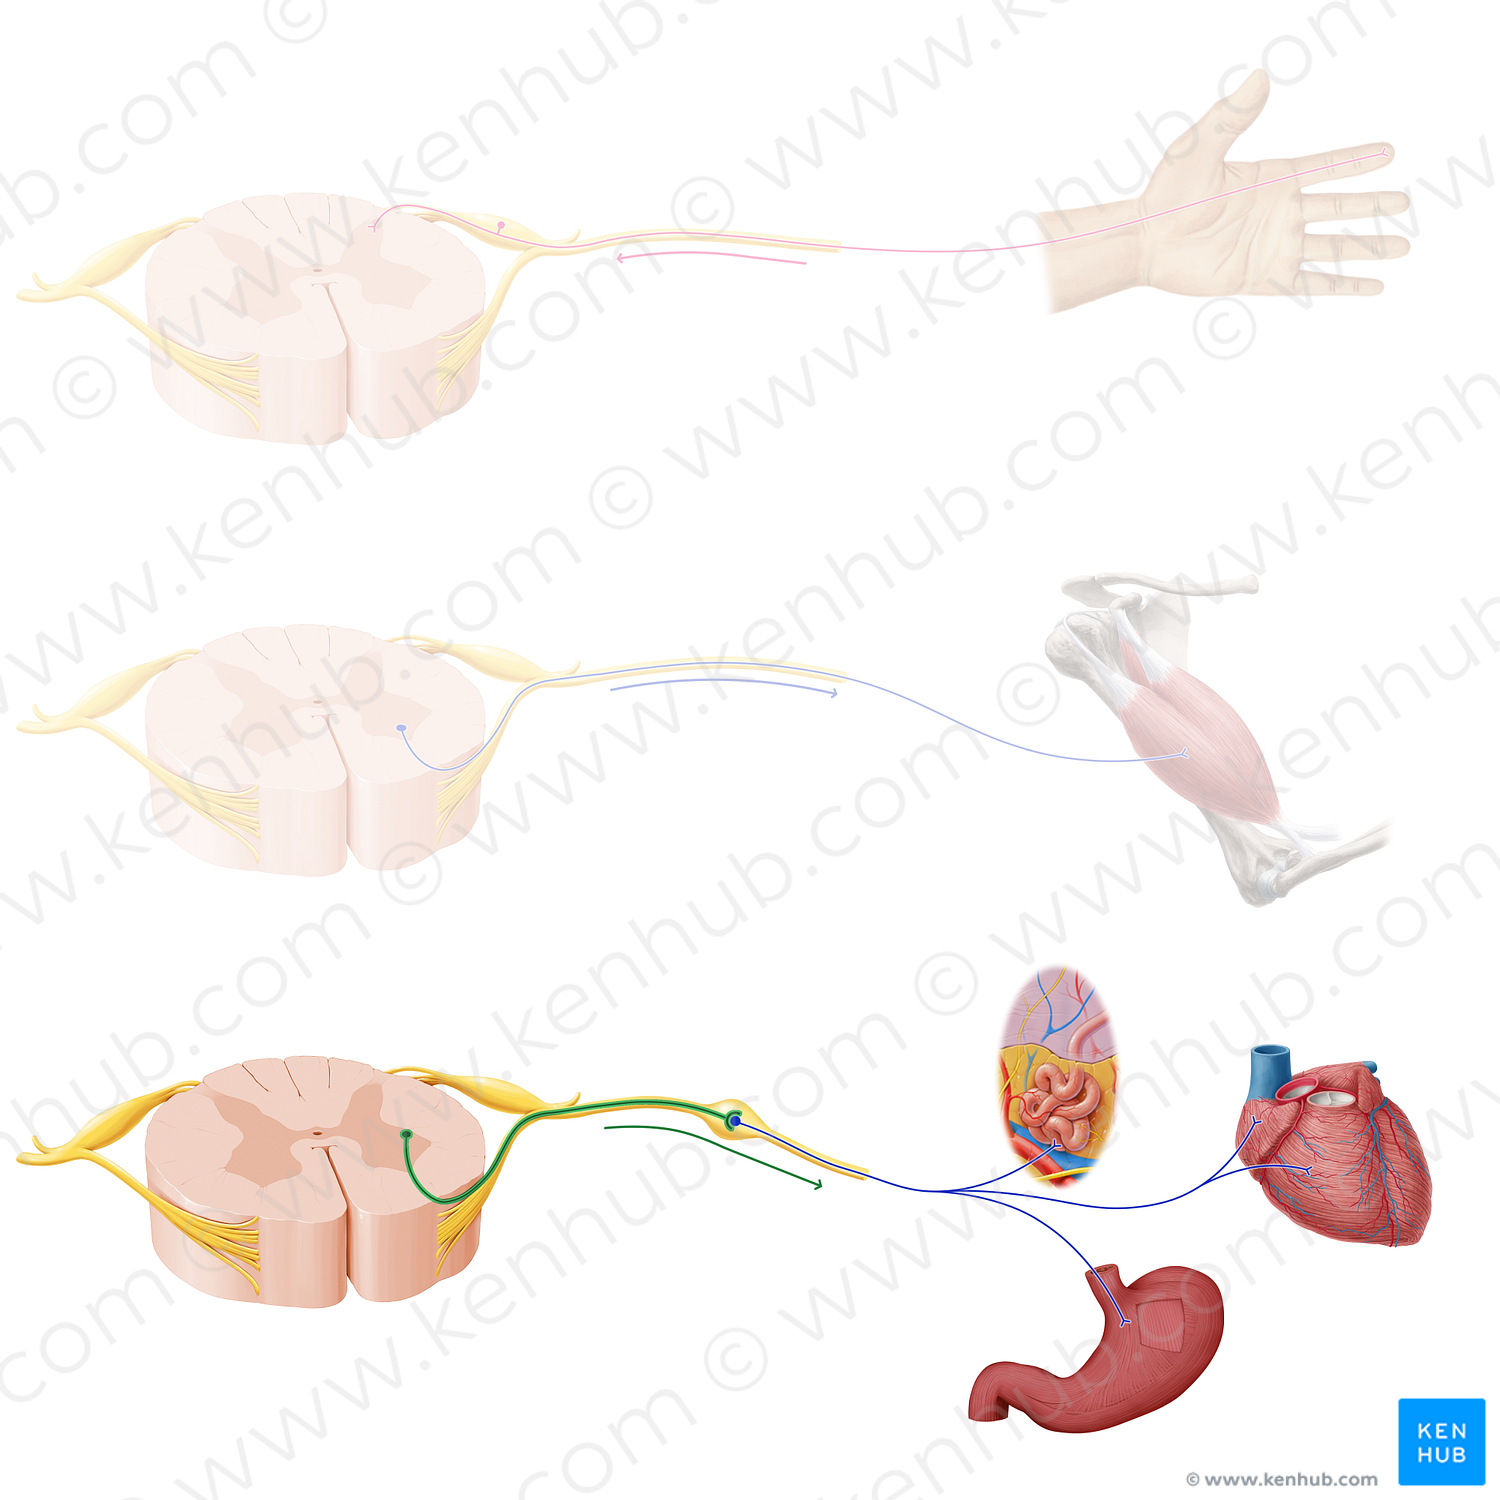 Preganglionic autonomic nerve fiber (#20915)